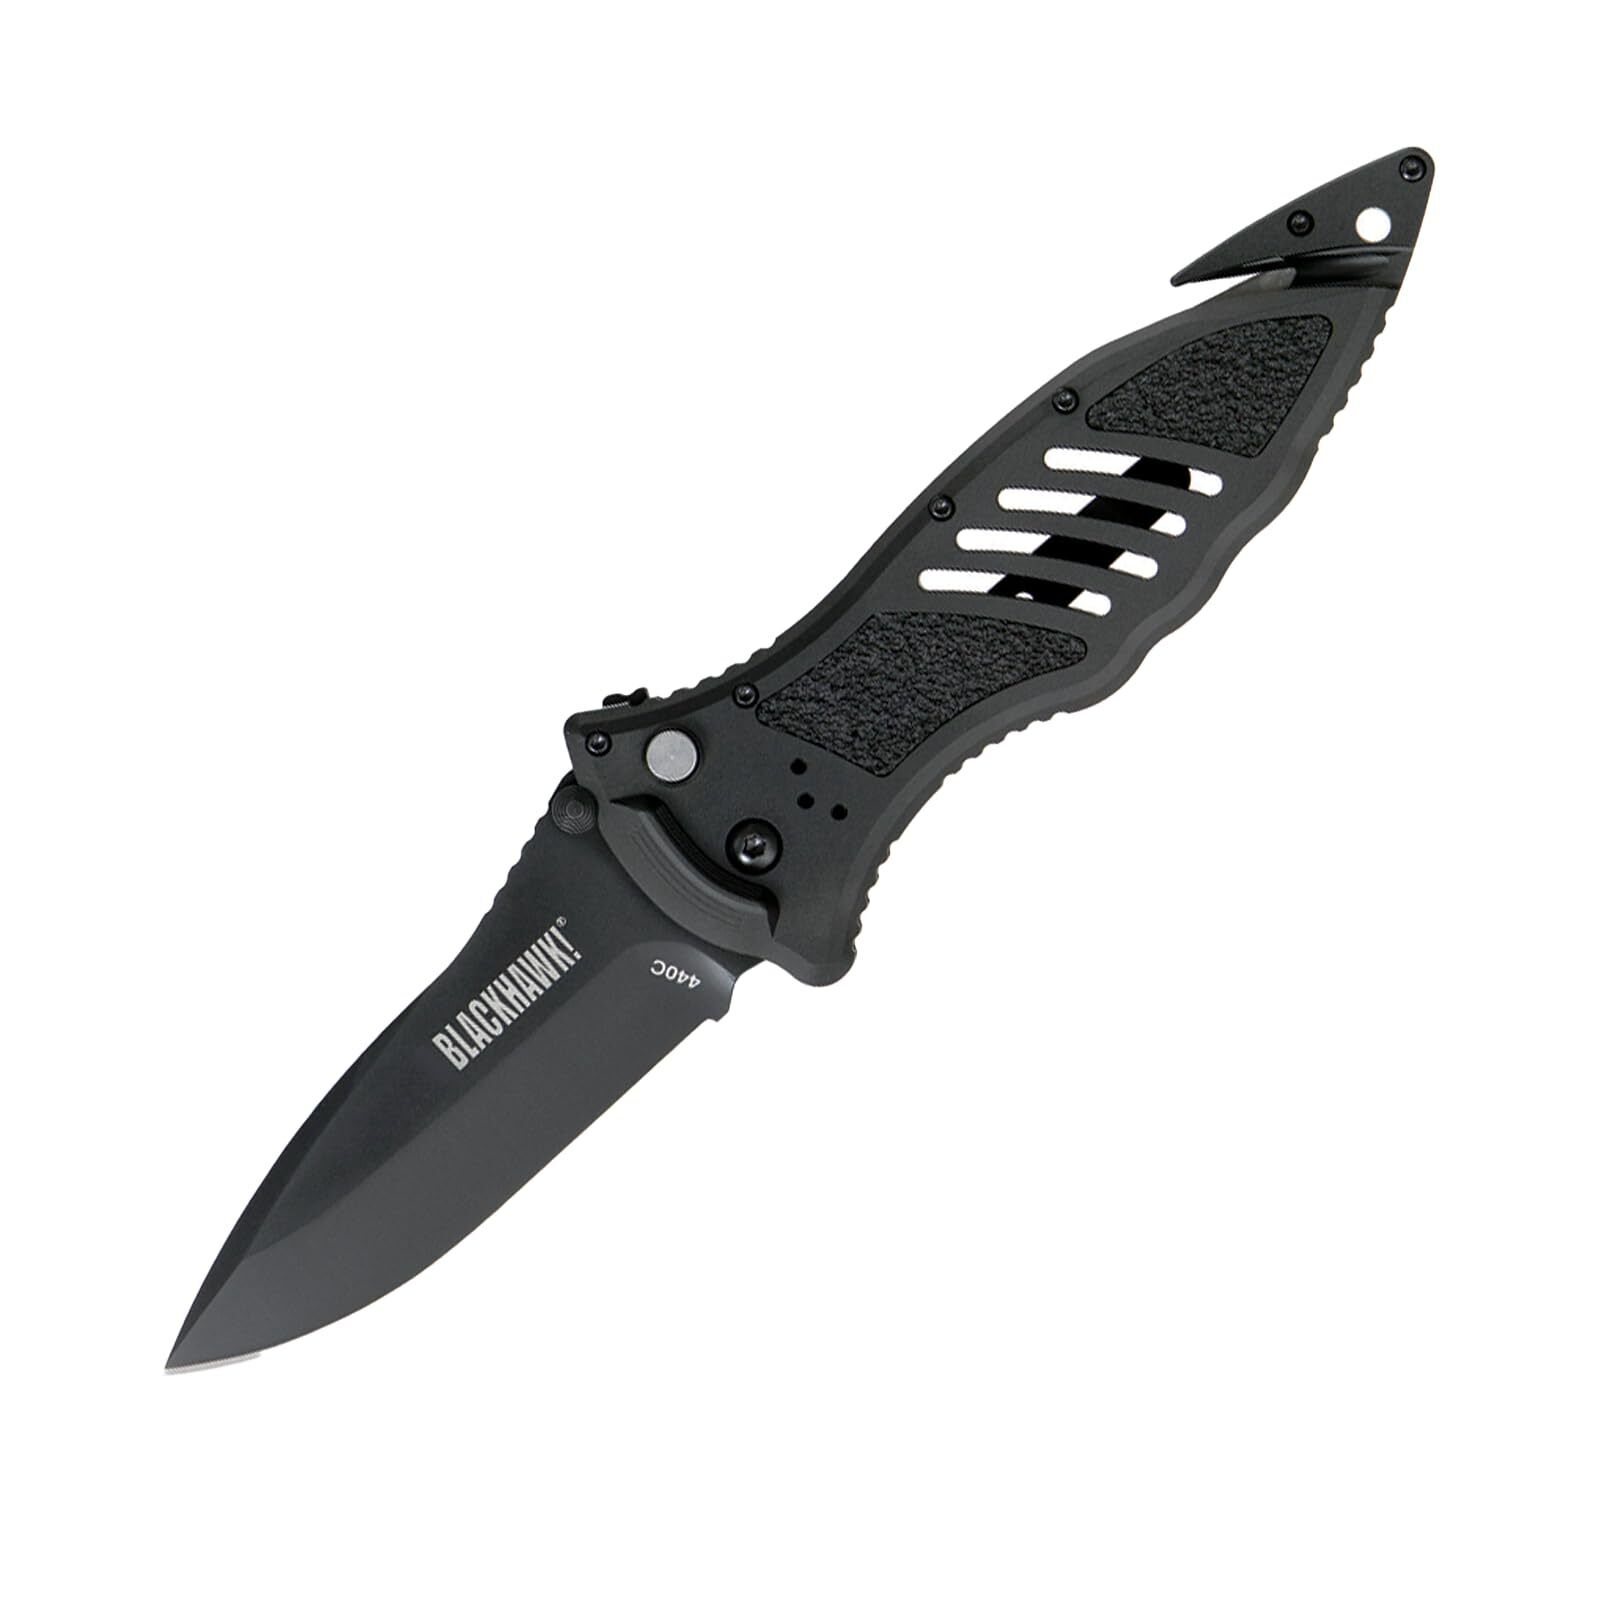 BLACKHAWK Large Button Lock Folding Knife, 3-3/4” D2 Tool Steel Blade with